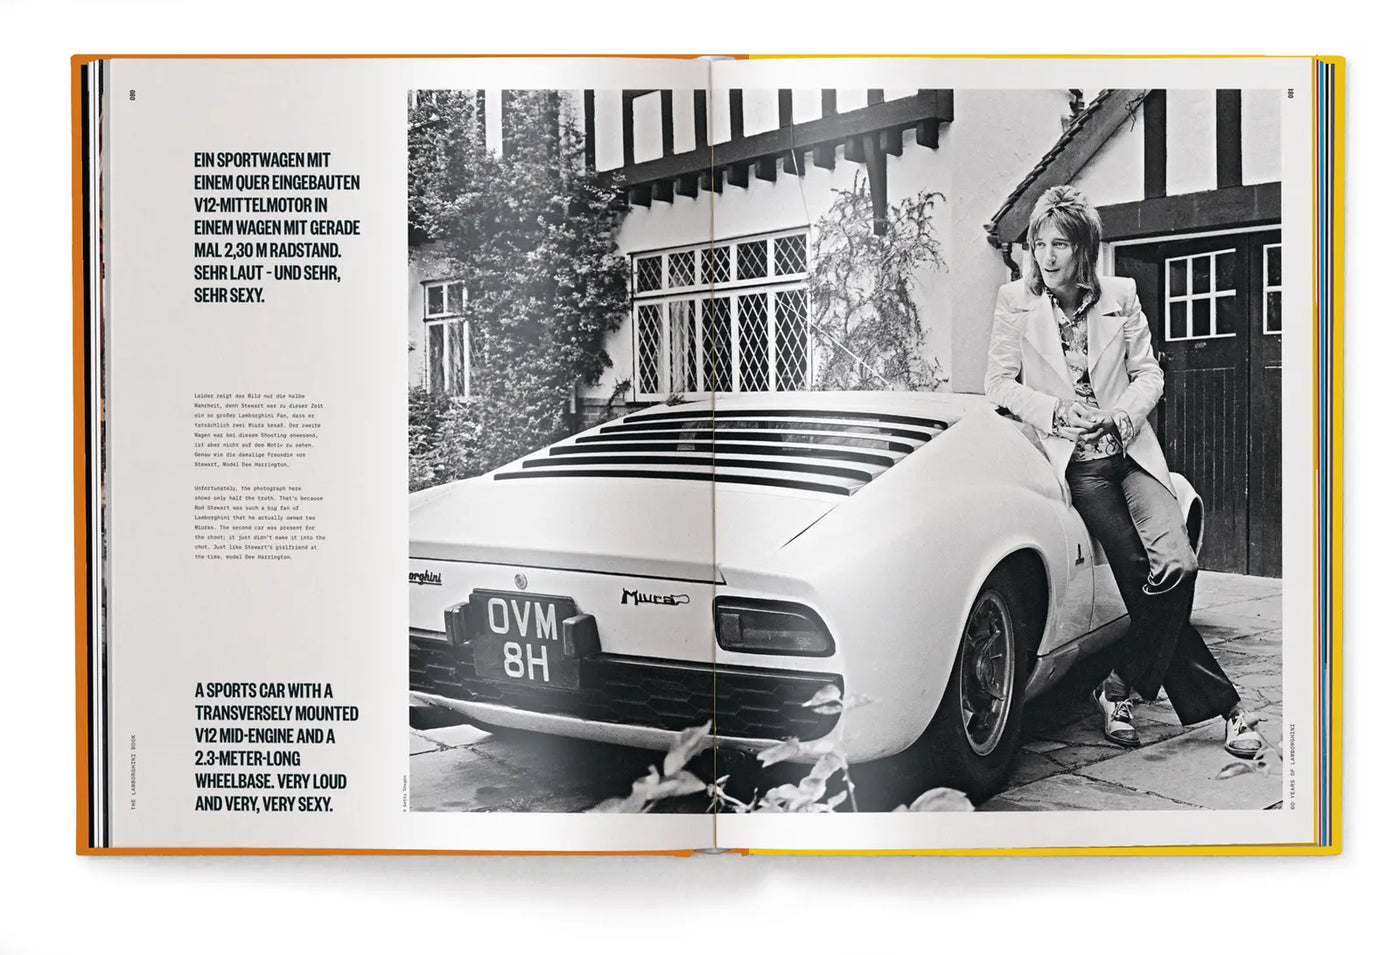 The Lamborghini Book